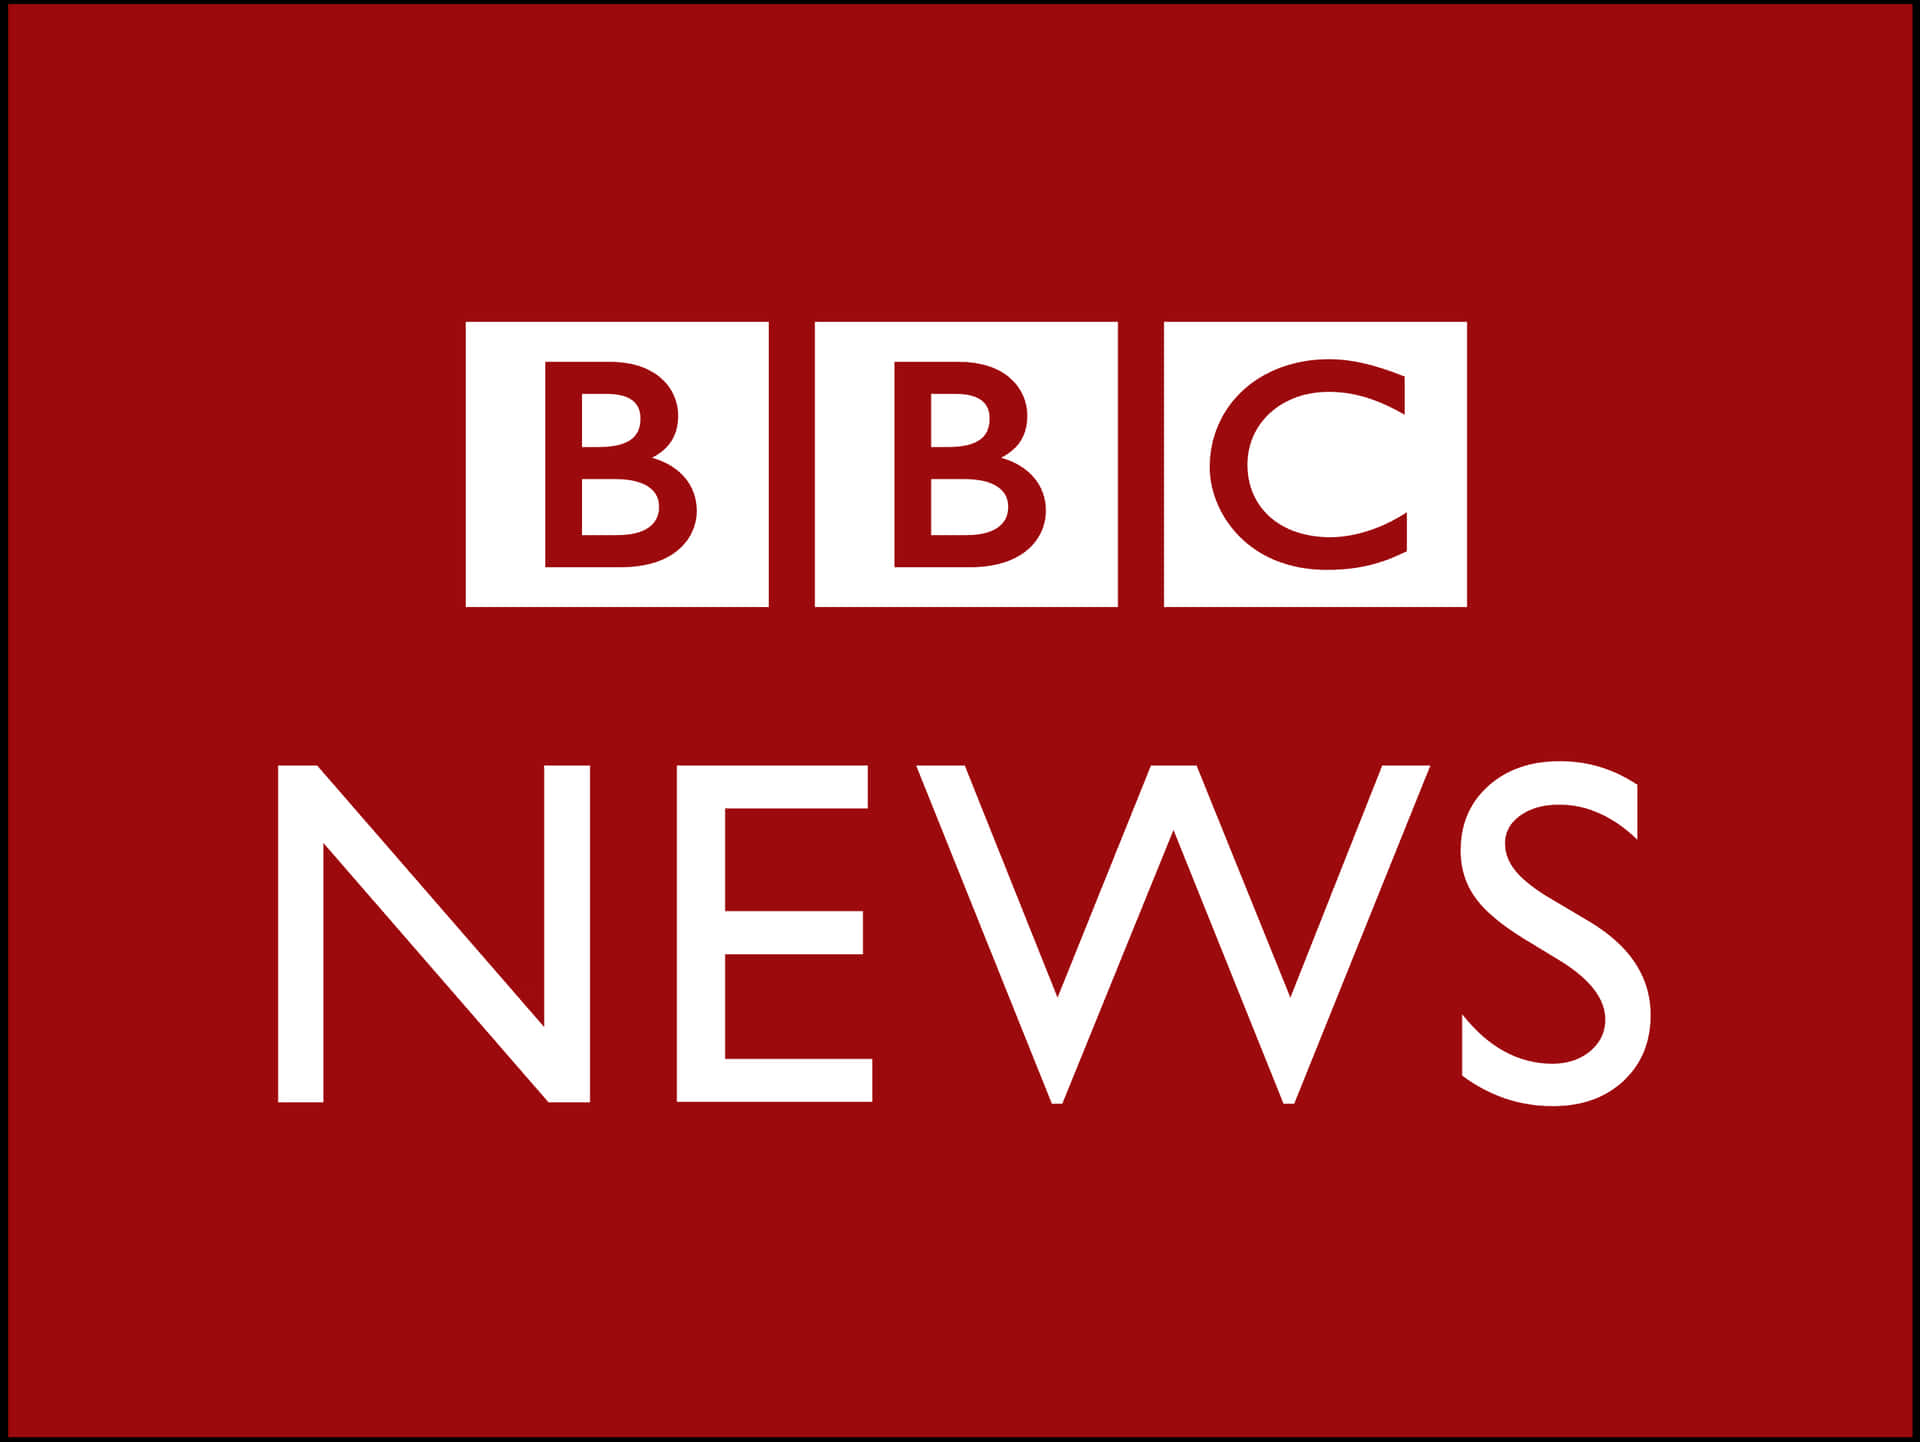 BBC News Logo Maroon Picture